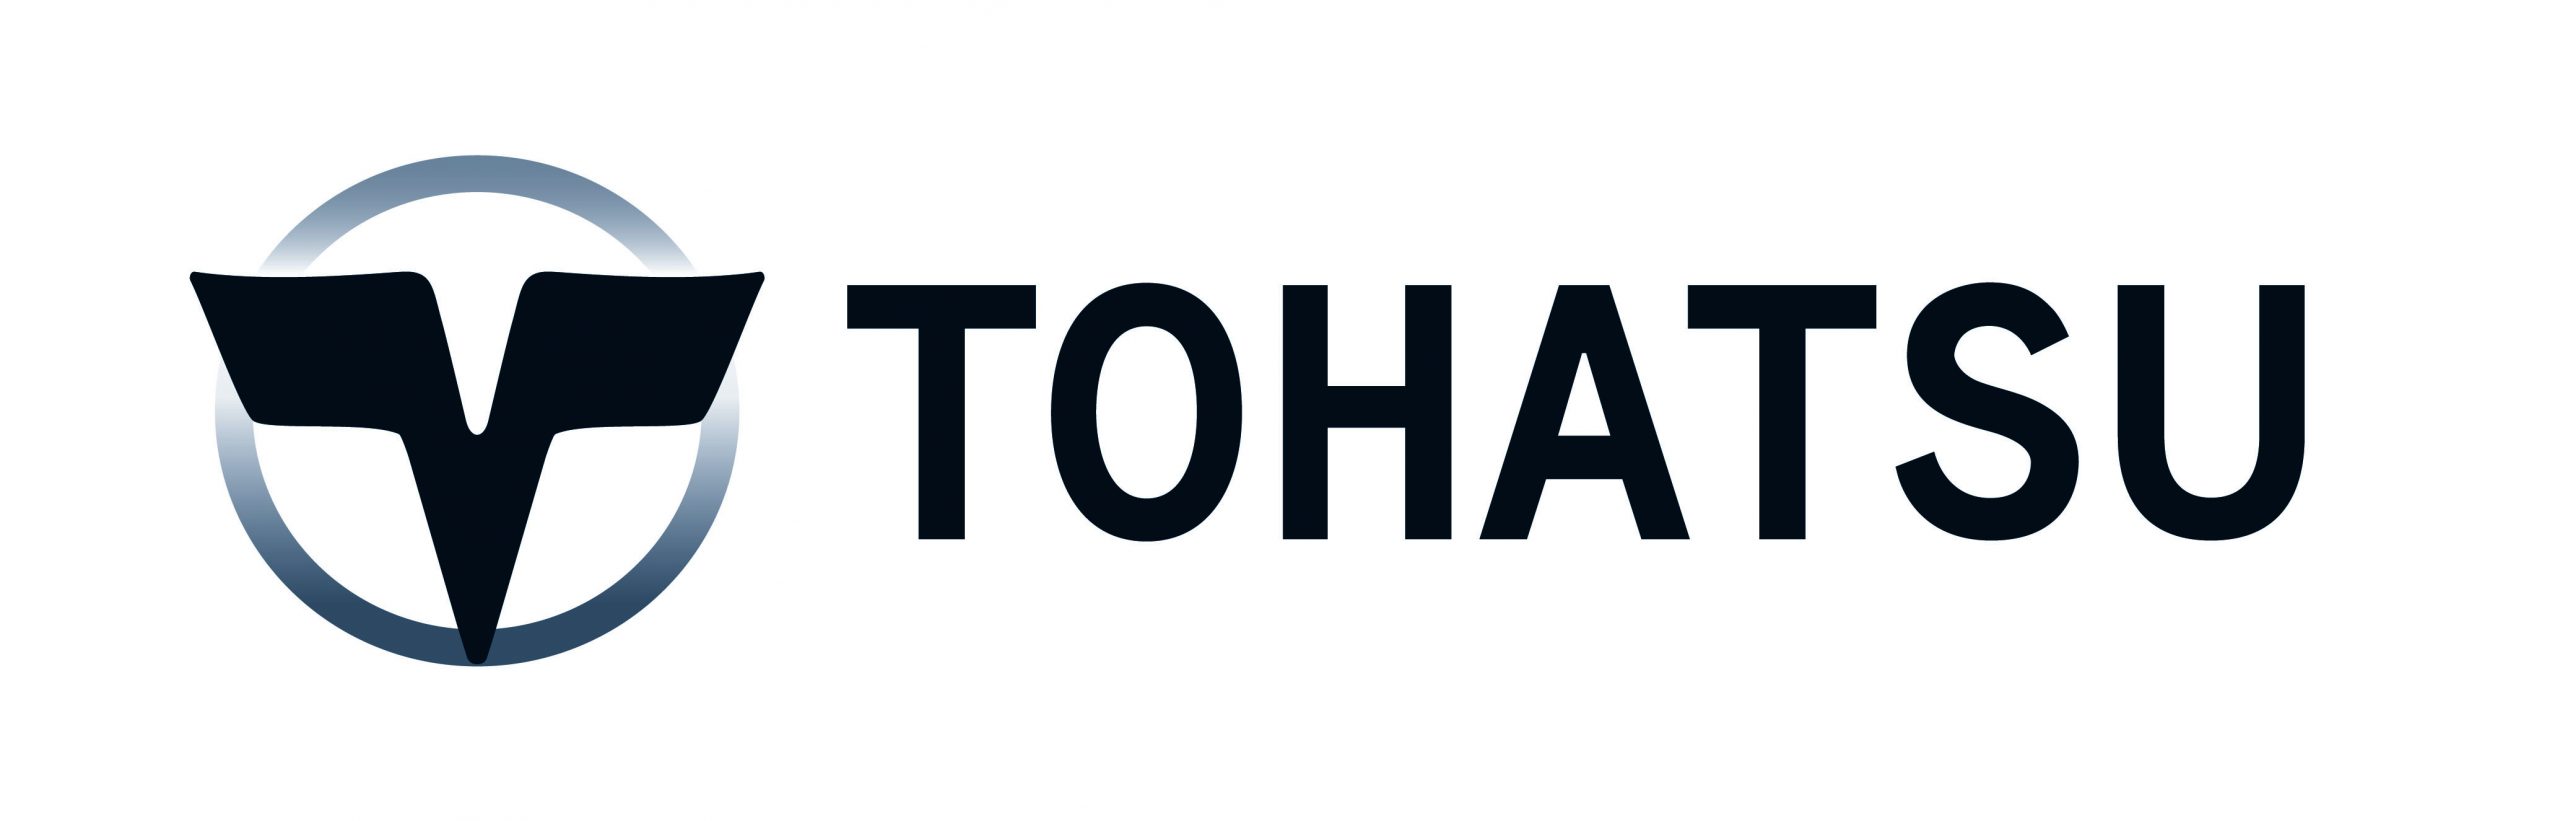 Tohatsu-scaled